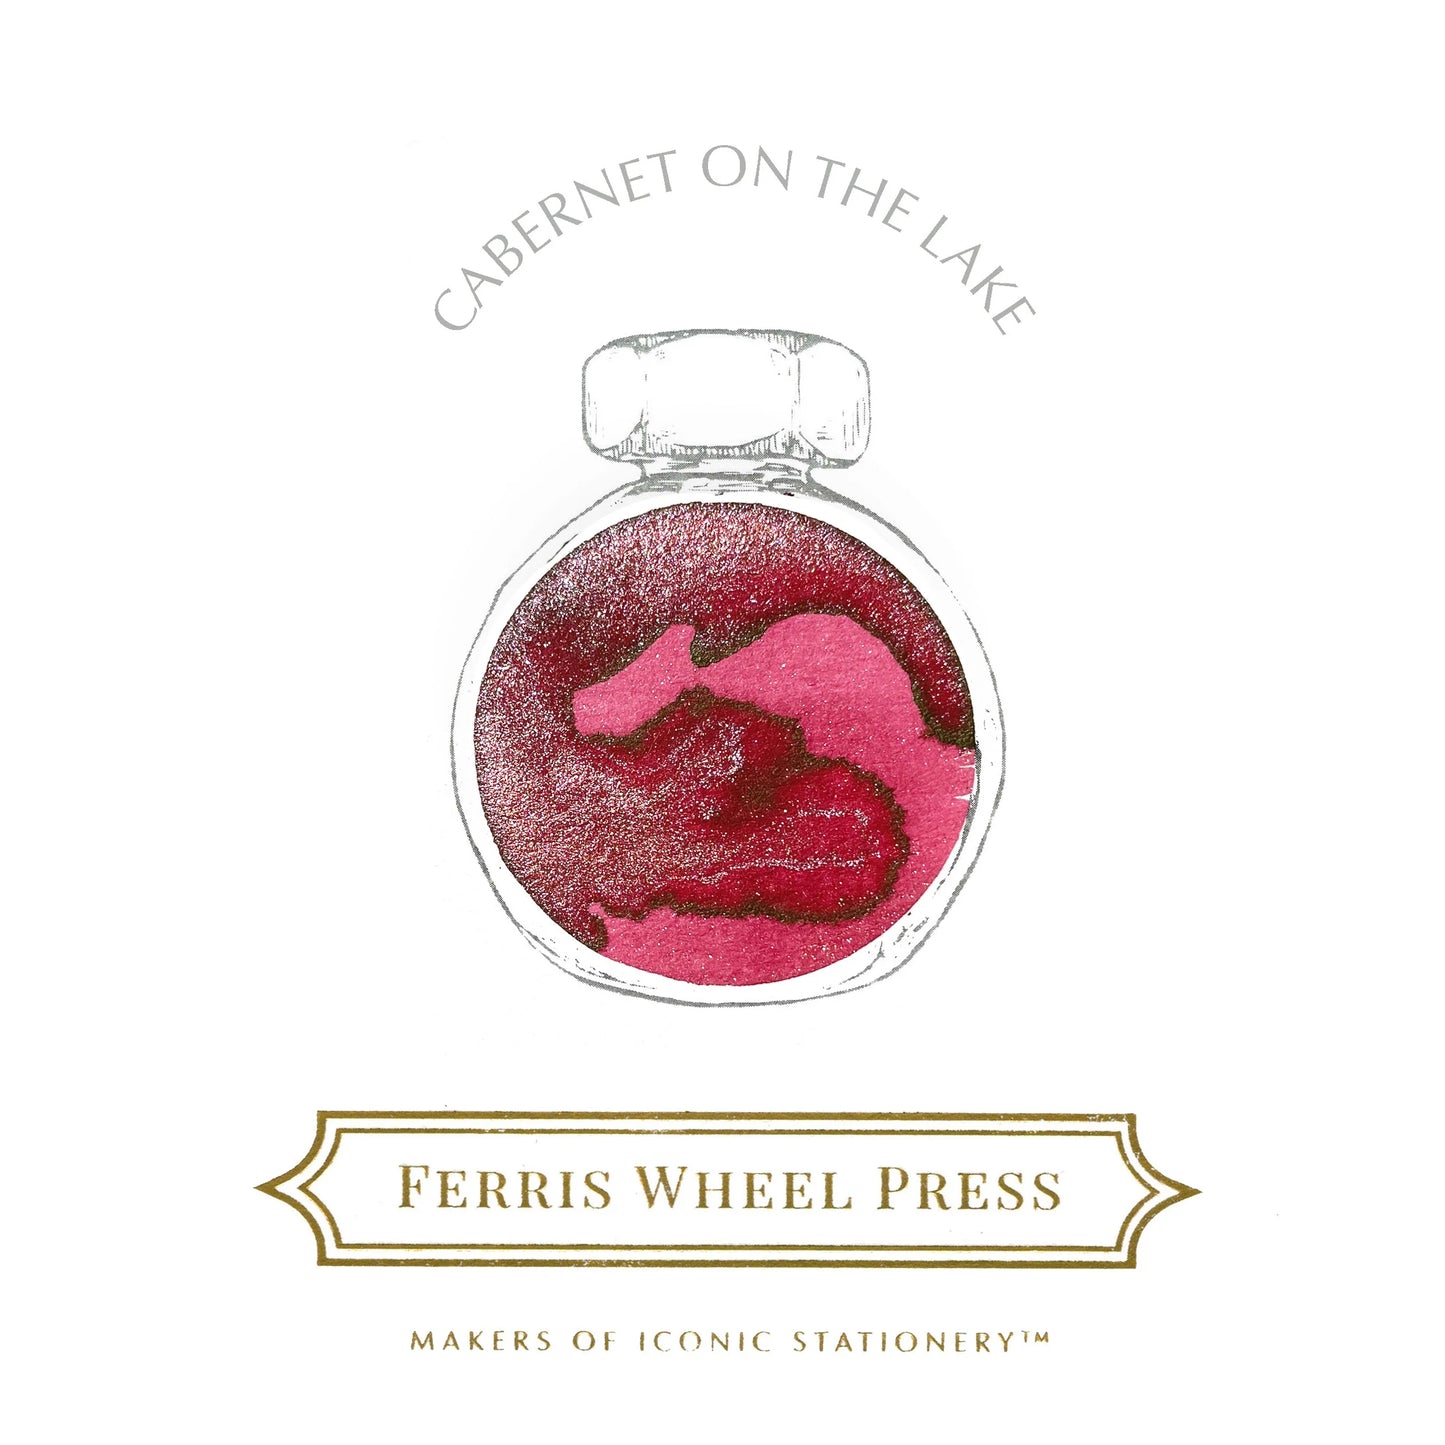 Ferris Wheel Press - Cabernet on the Lake Ink 38 ml